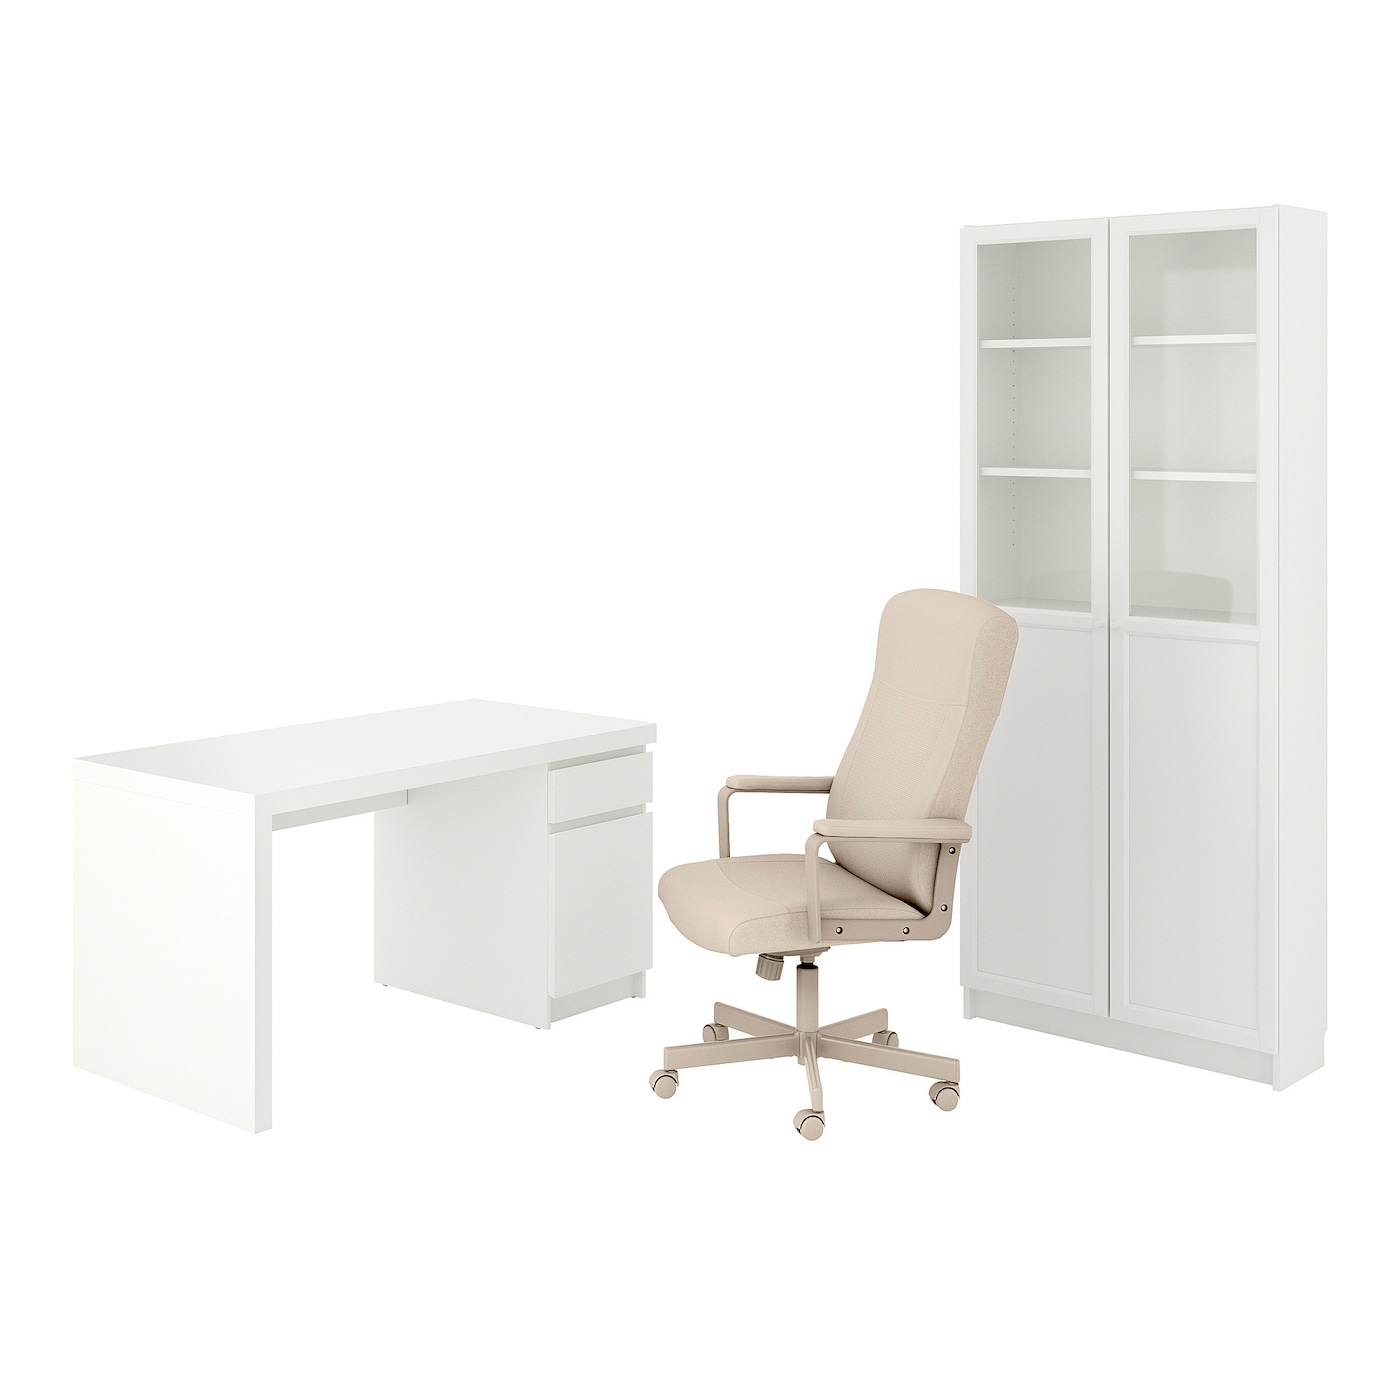 Комбинация: стол, кресло и шкаф - IKEA MALM/MILLBERGET/ BILLY/OXBERG, 140х65 см, 202х80х30 см, белый/бежевый  МАЛЬМ/МИЛЛБЕРГЕТ/БИЛЛИ/ОКСБЕРГ ИКЕА